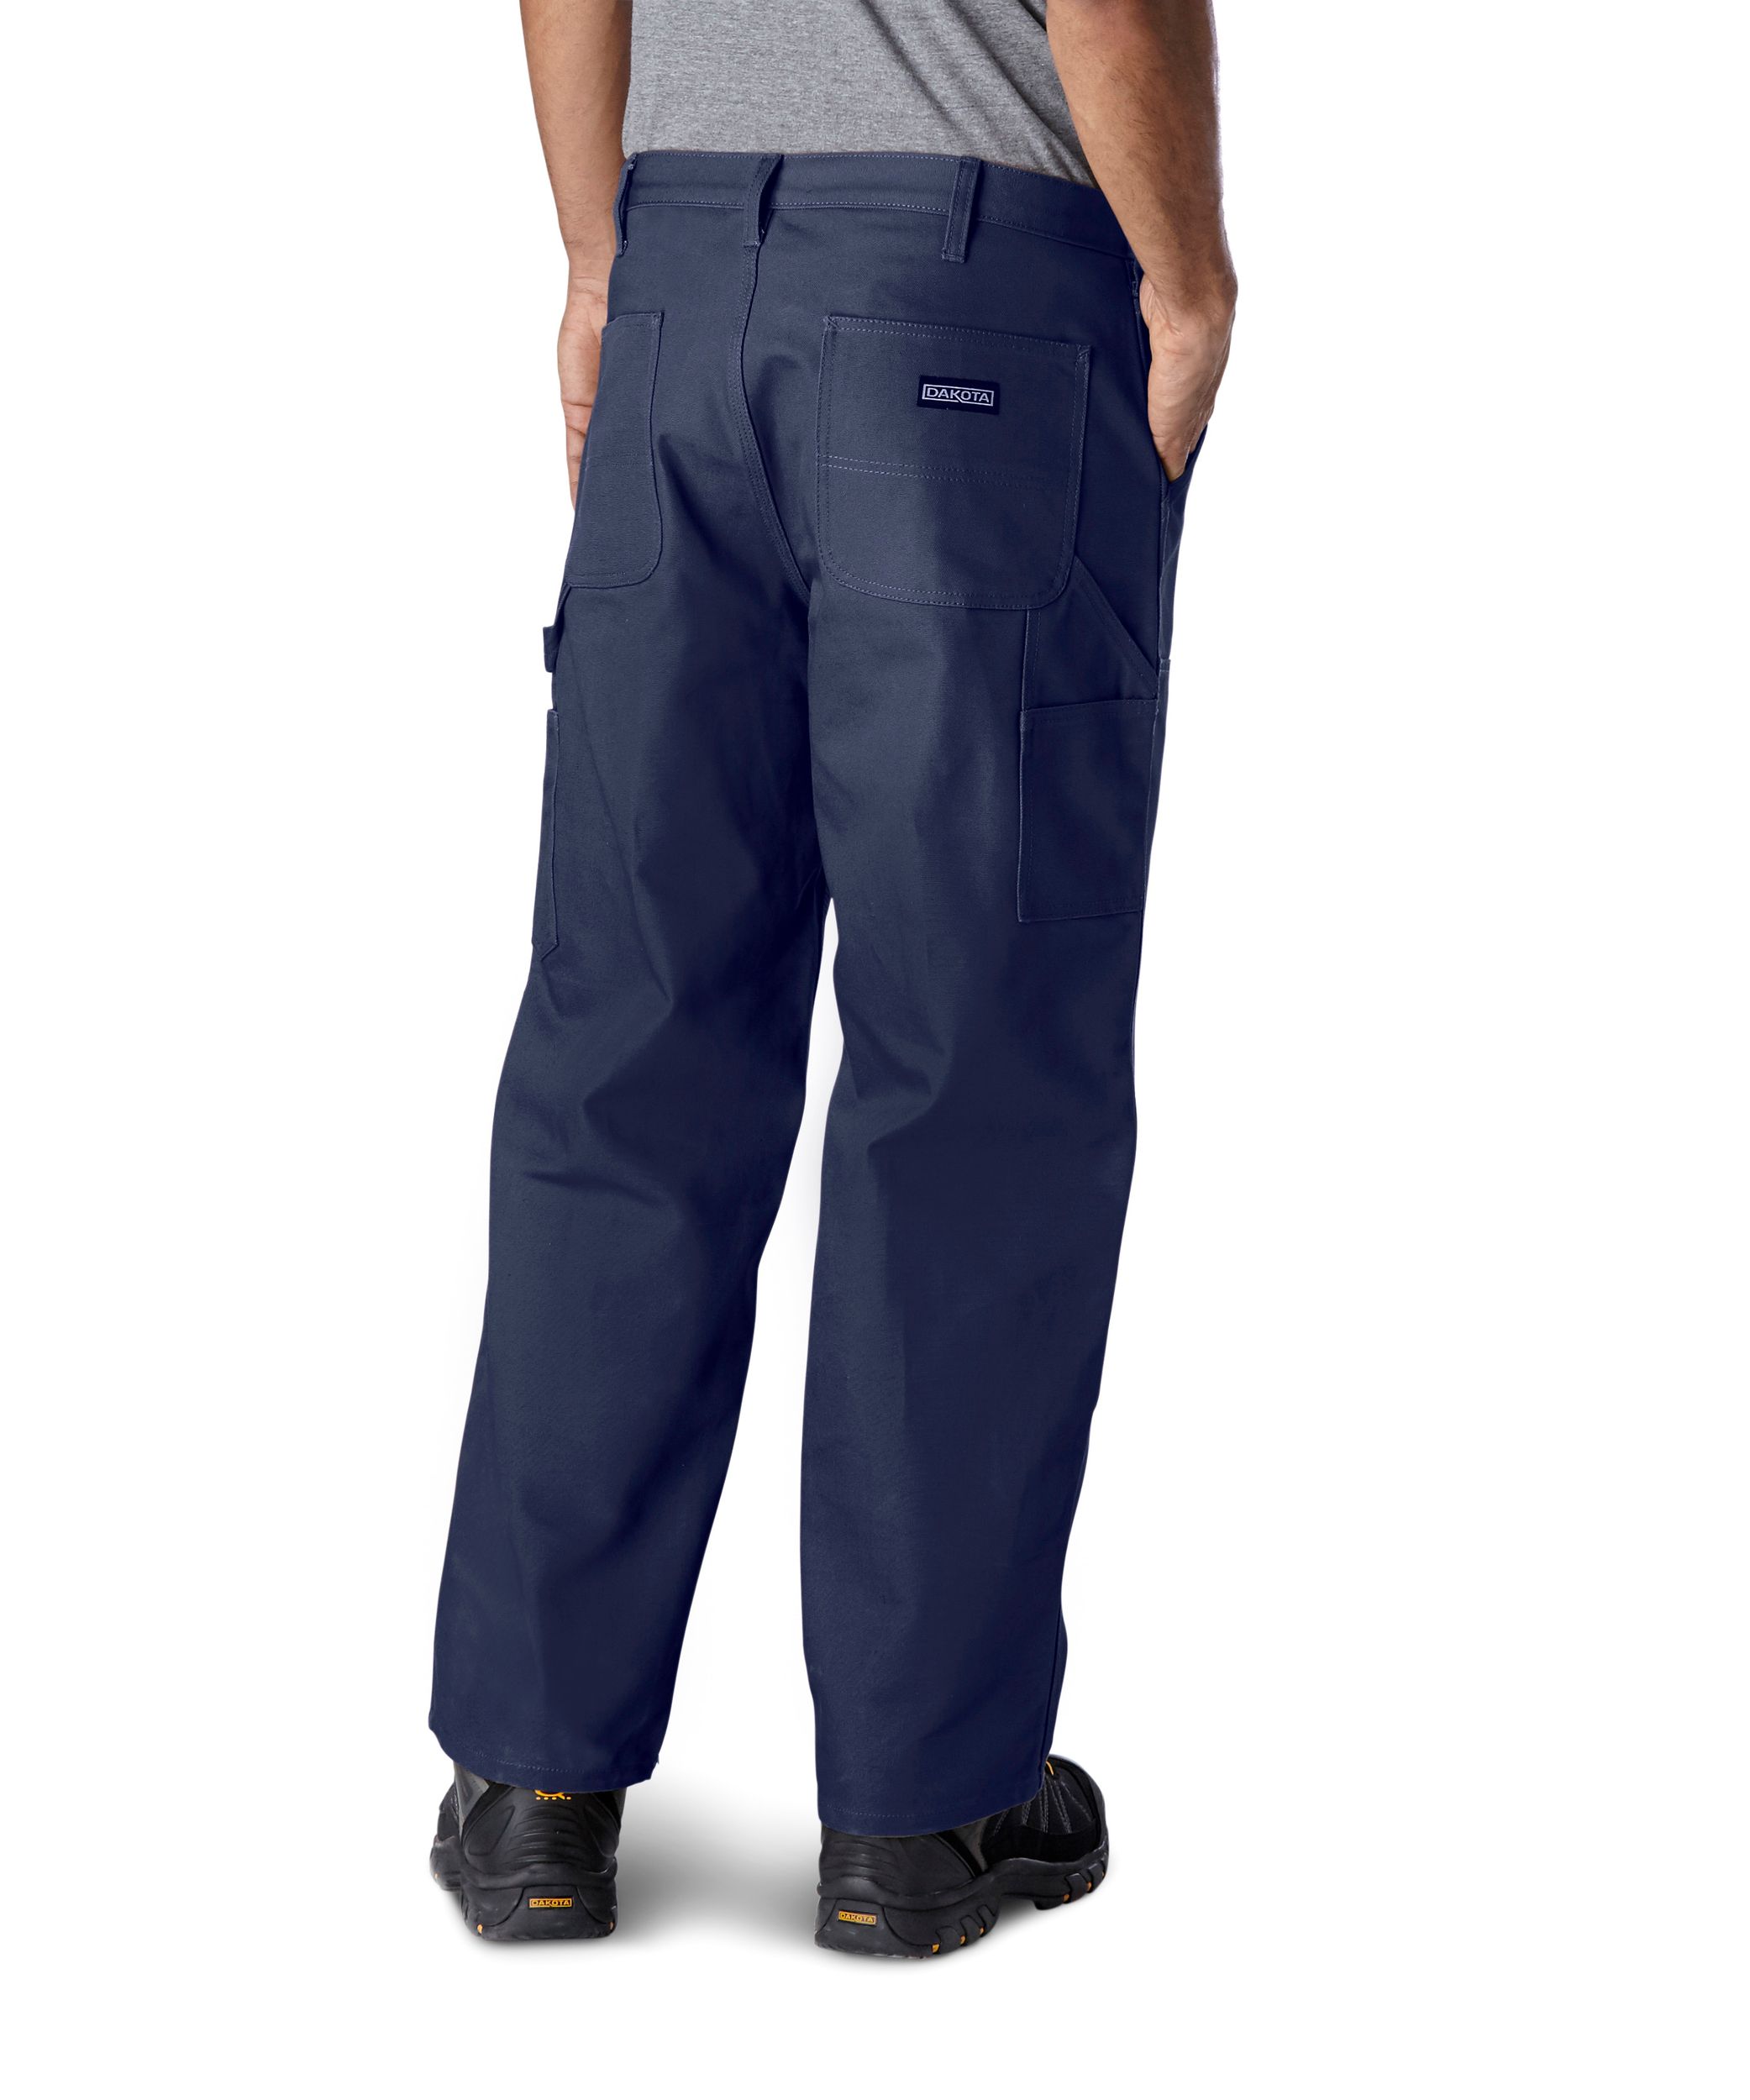 Dakota WorkPro Series Men's Duck Double Front Utility Work Pants 